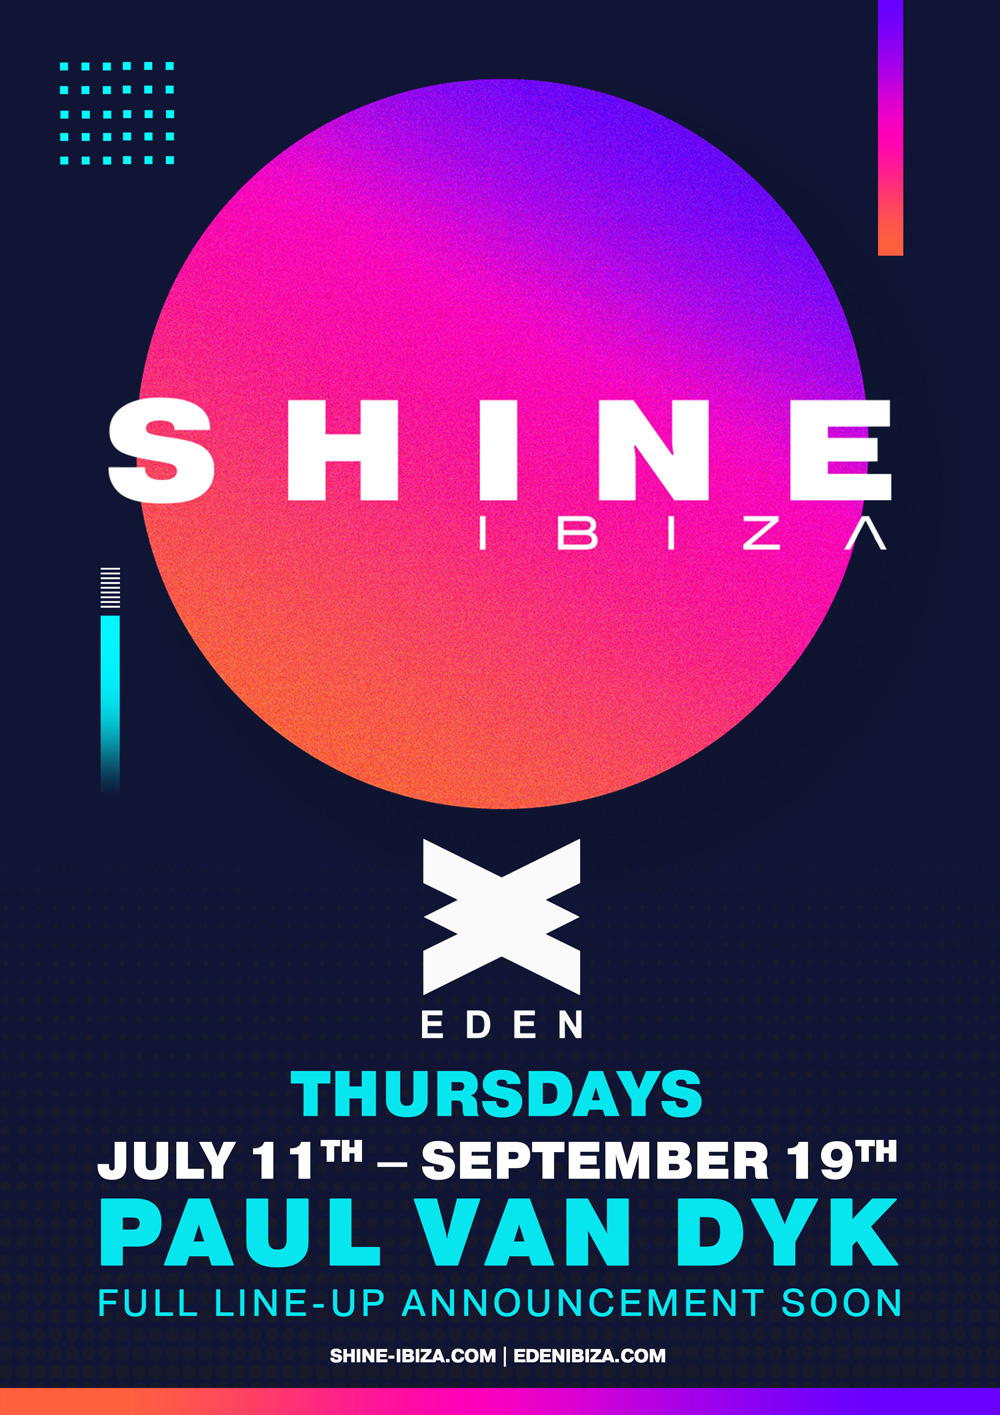 Paul van Dyk joins SHINE Ibiza for season 2